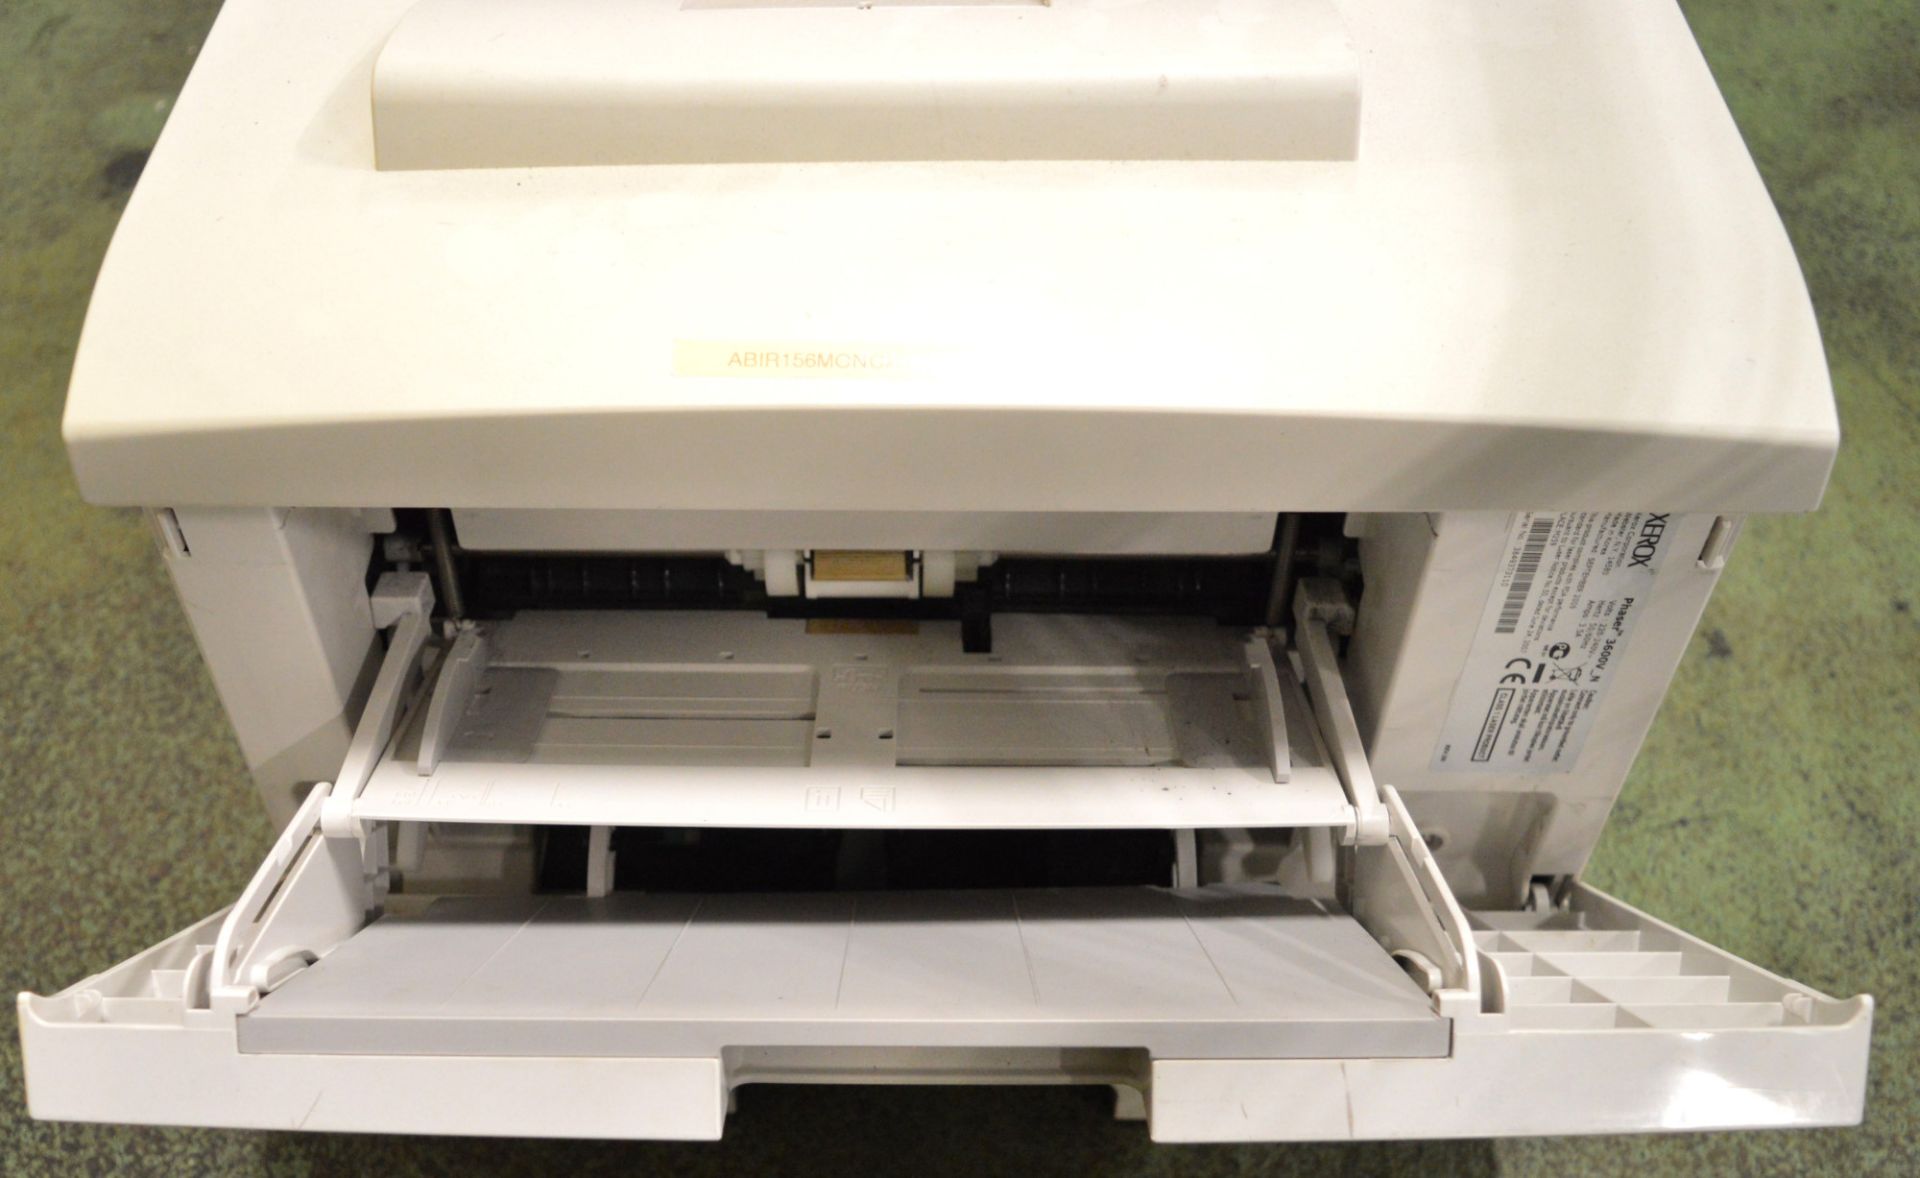 4x Xerox Phaser 3600 Printers. - Image 4 of 5